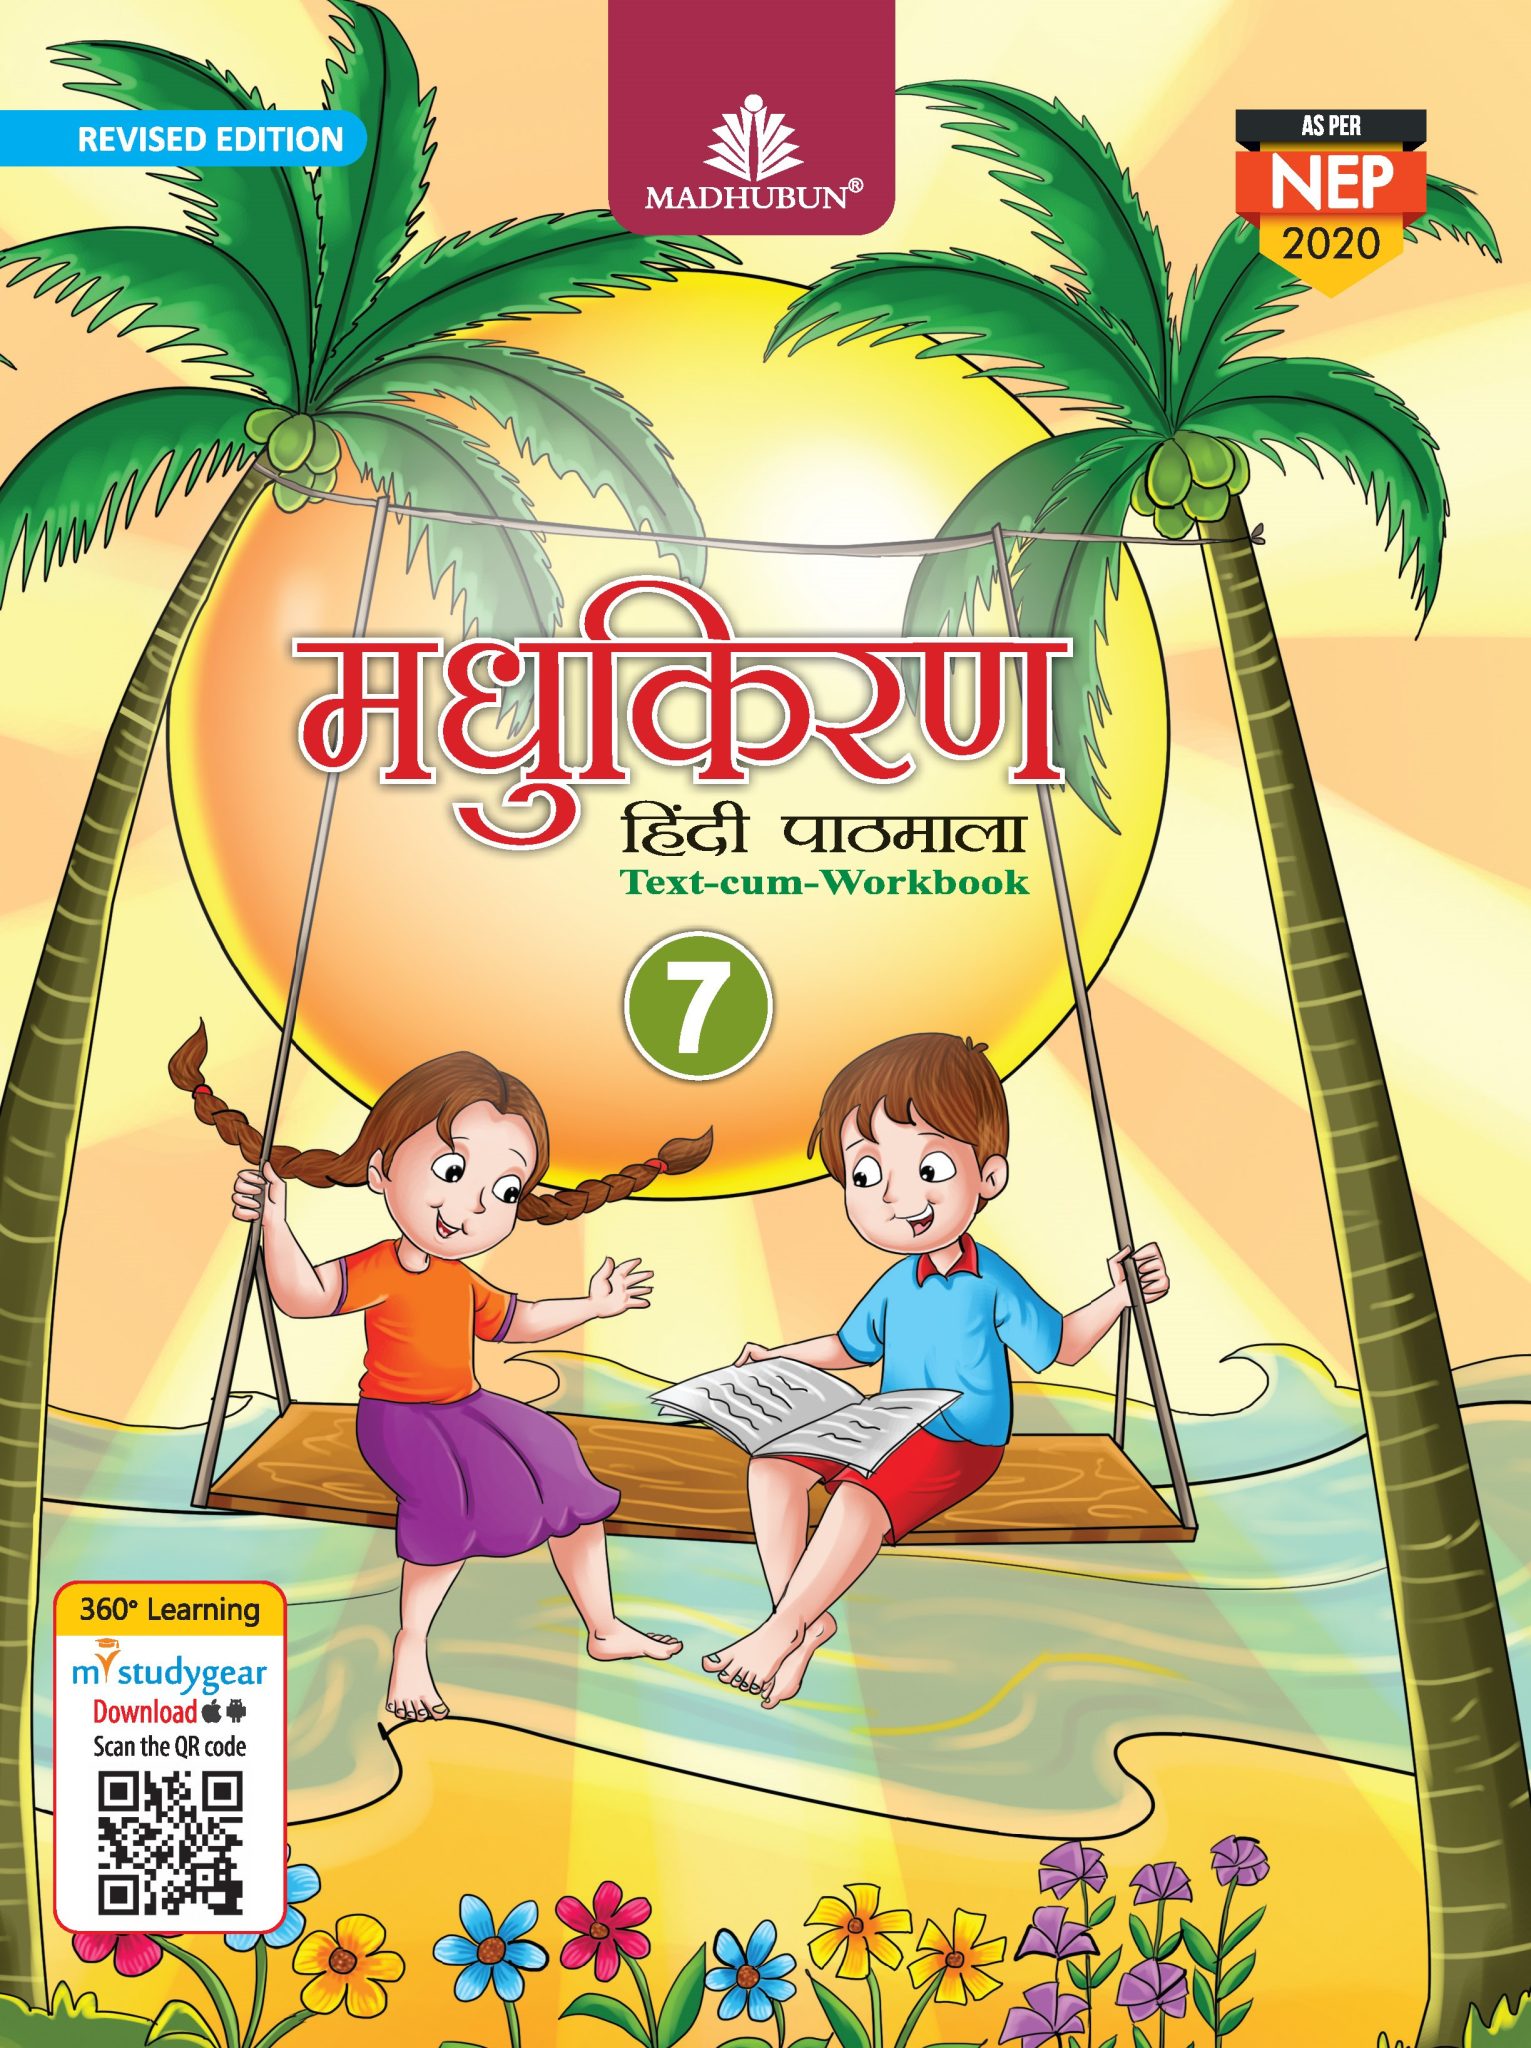 Madhubun Madhukiran Hindi Pathmala Textbook For Class 7 New Edition Malik Booksellers